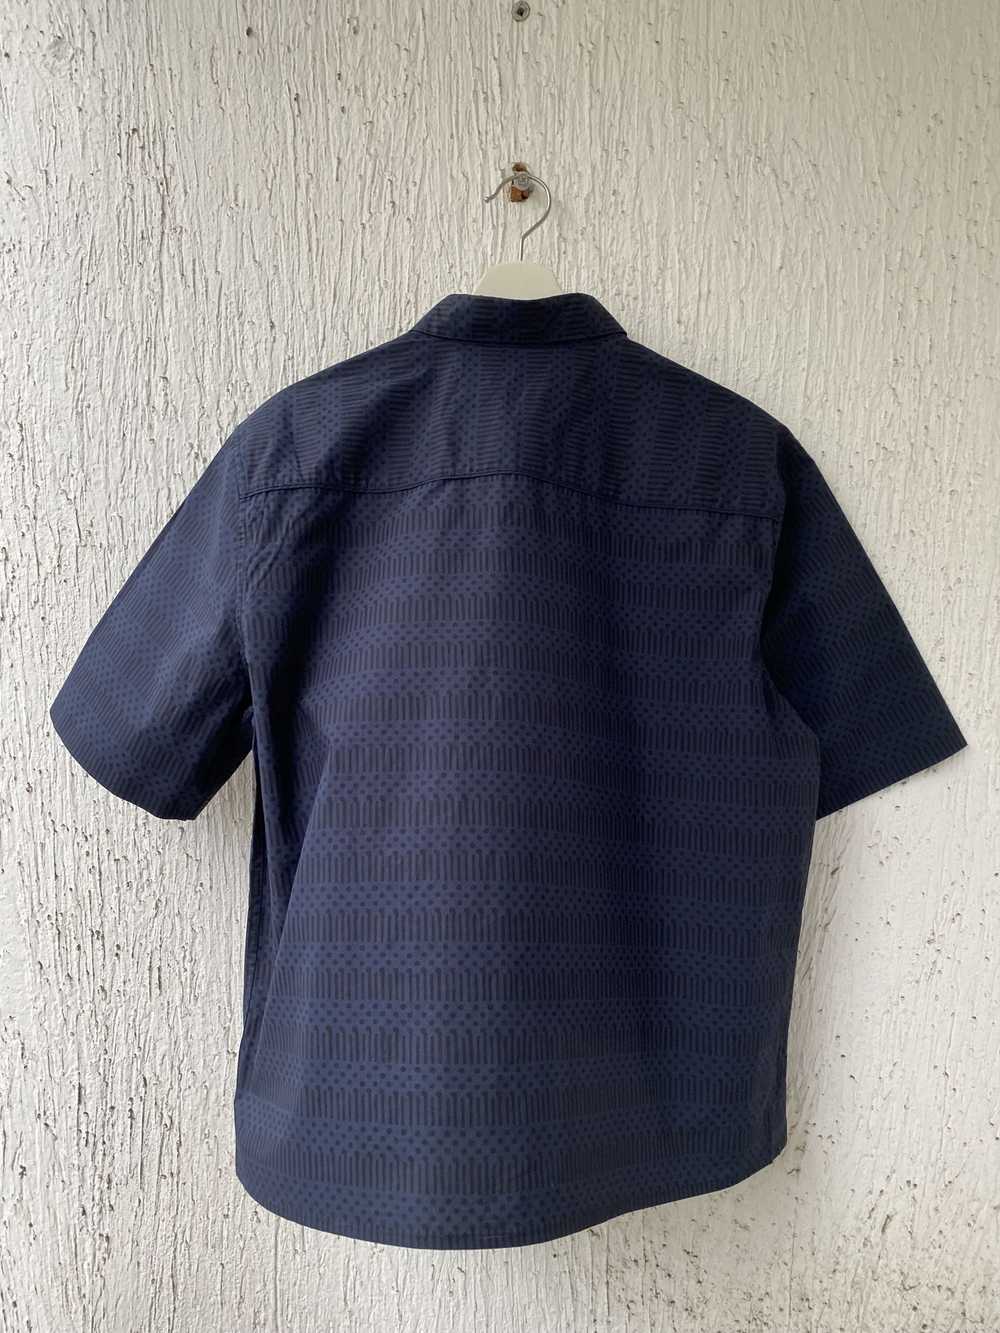 H&M × Marni patented short sleeve shirt - image 4